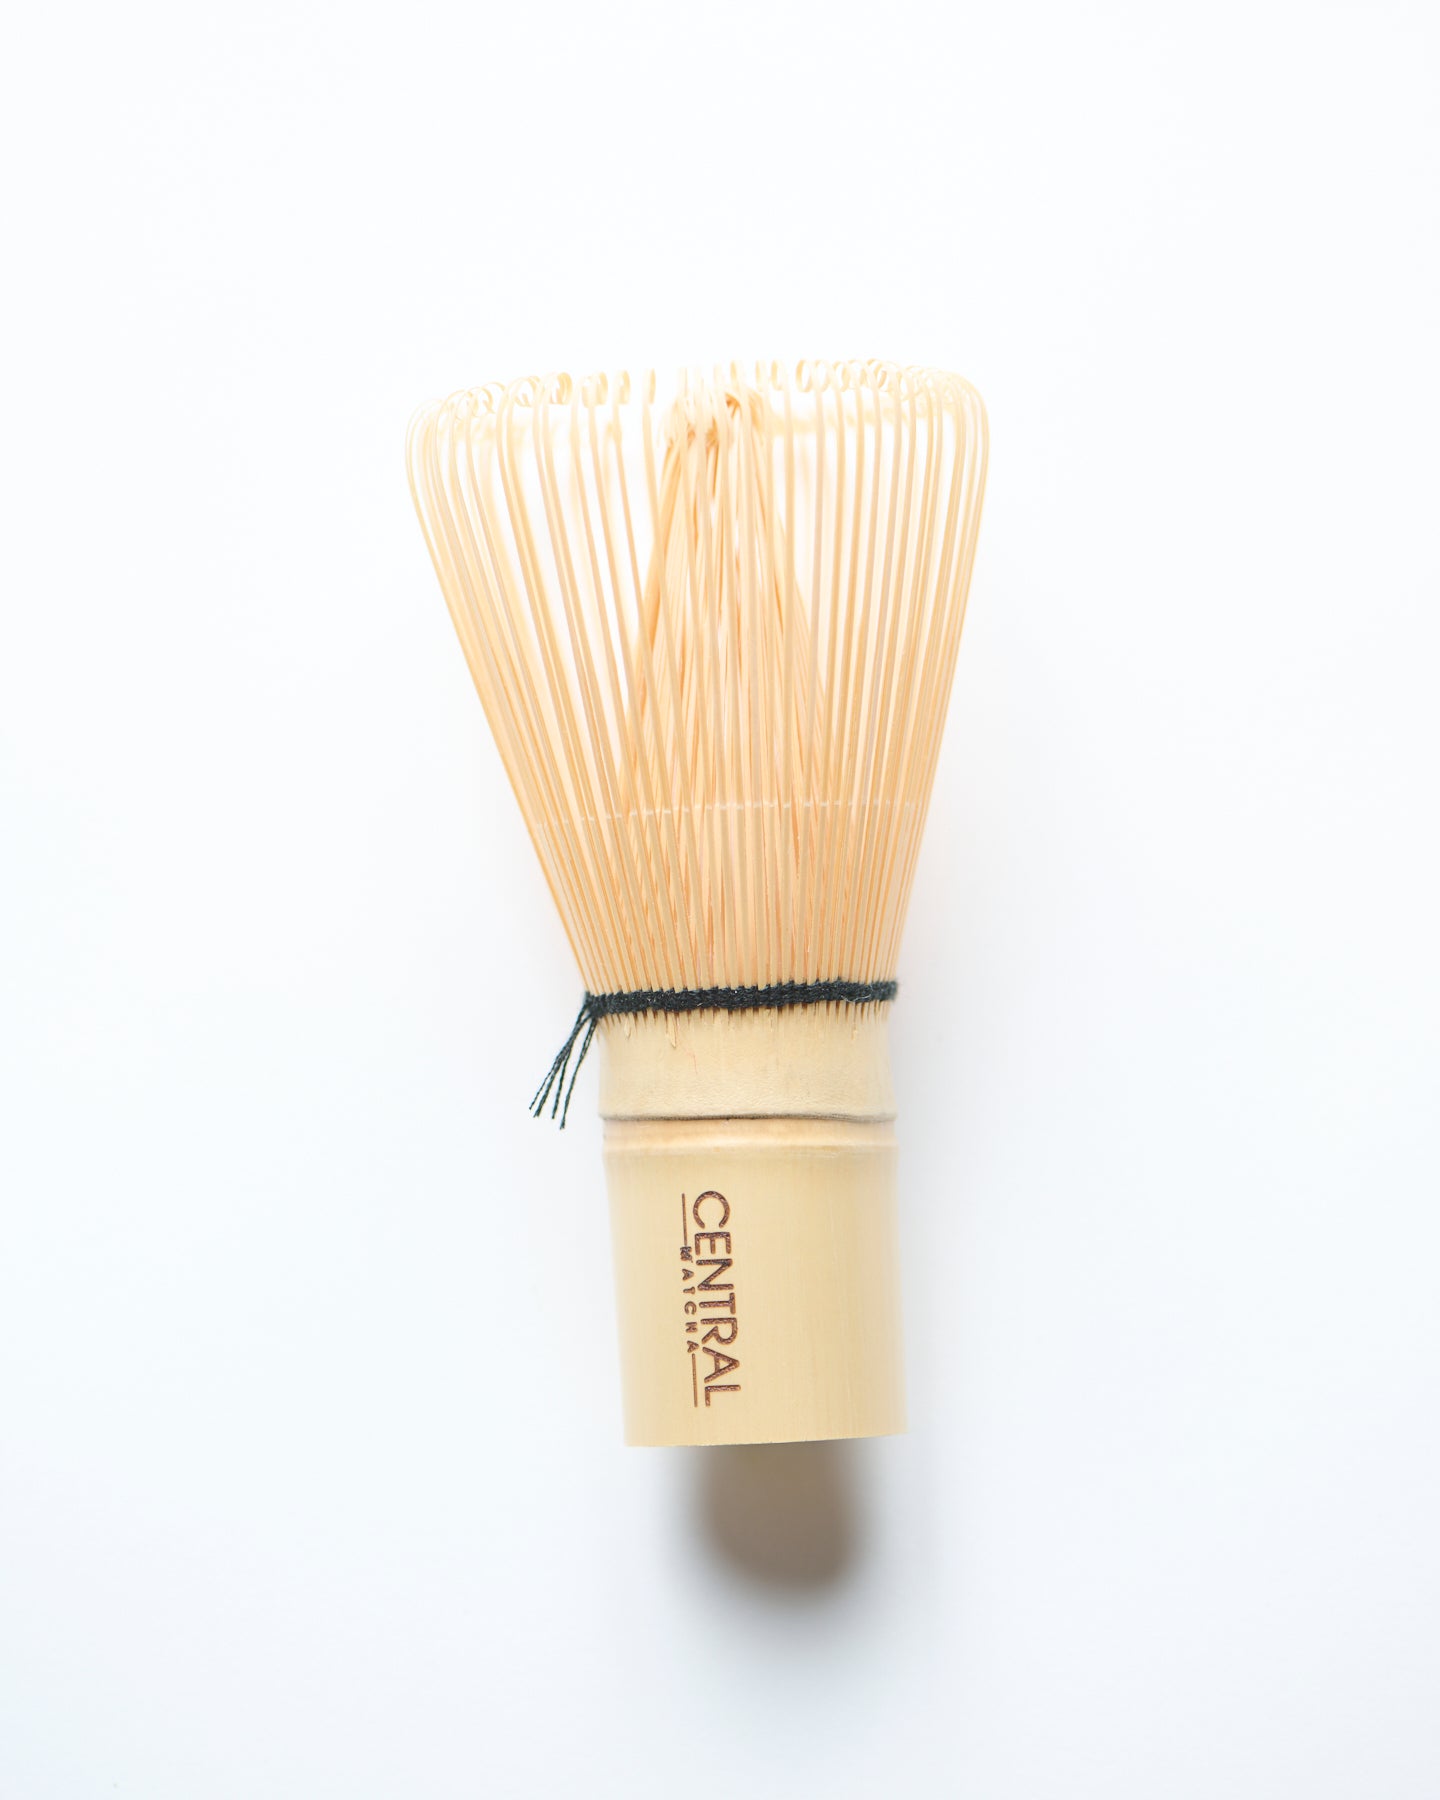 Mini Matcha Bamboo Whisk